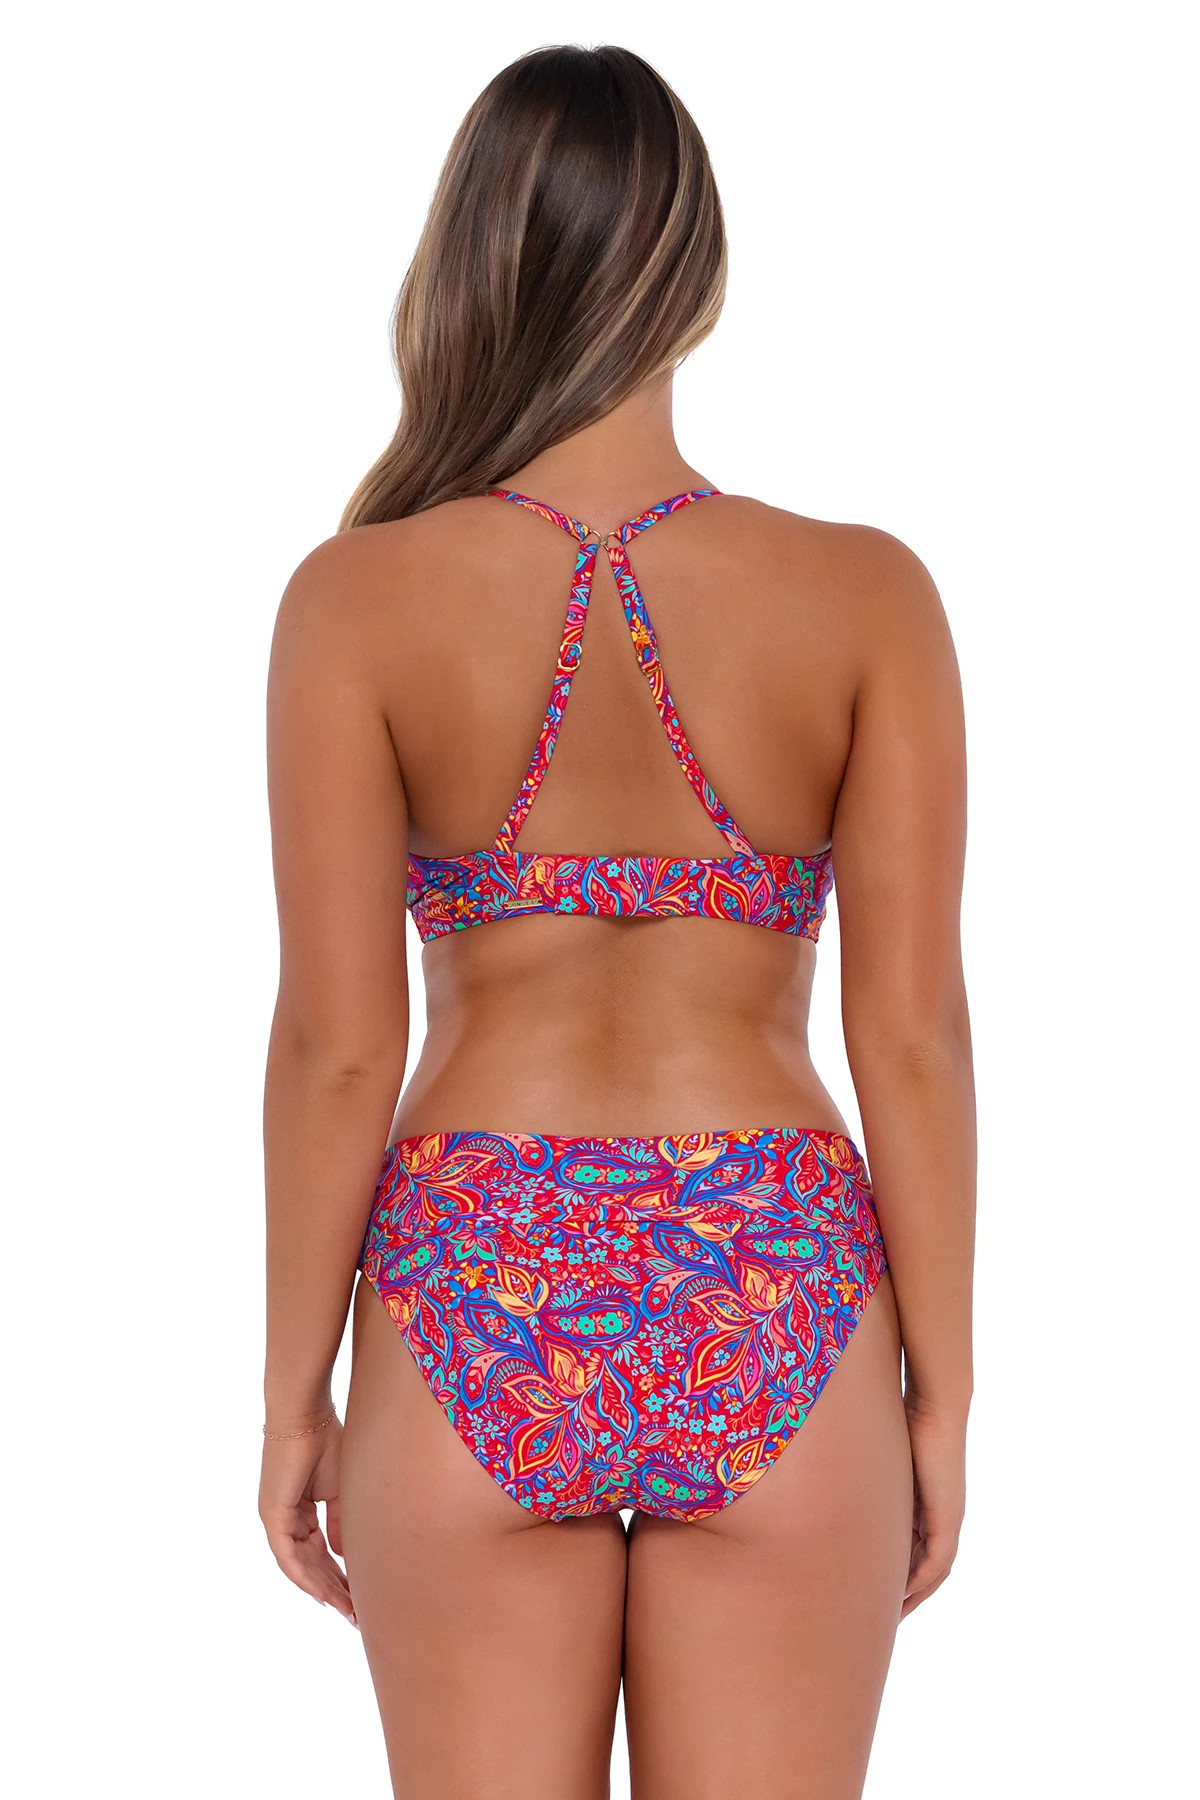 RUE PAISLEY Kauai Keyhole Bralette Bikini Top (E-H Cup) image number 3